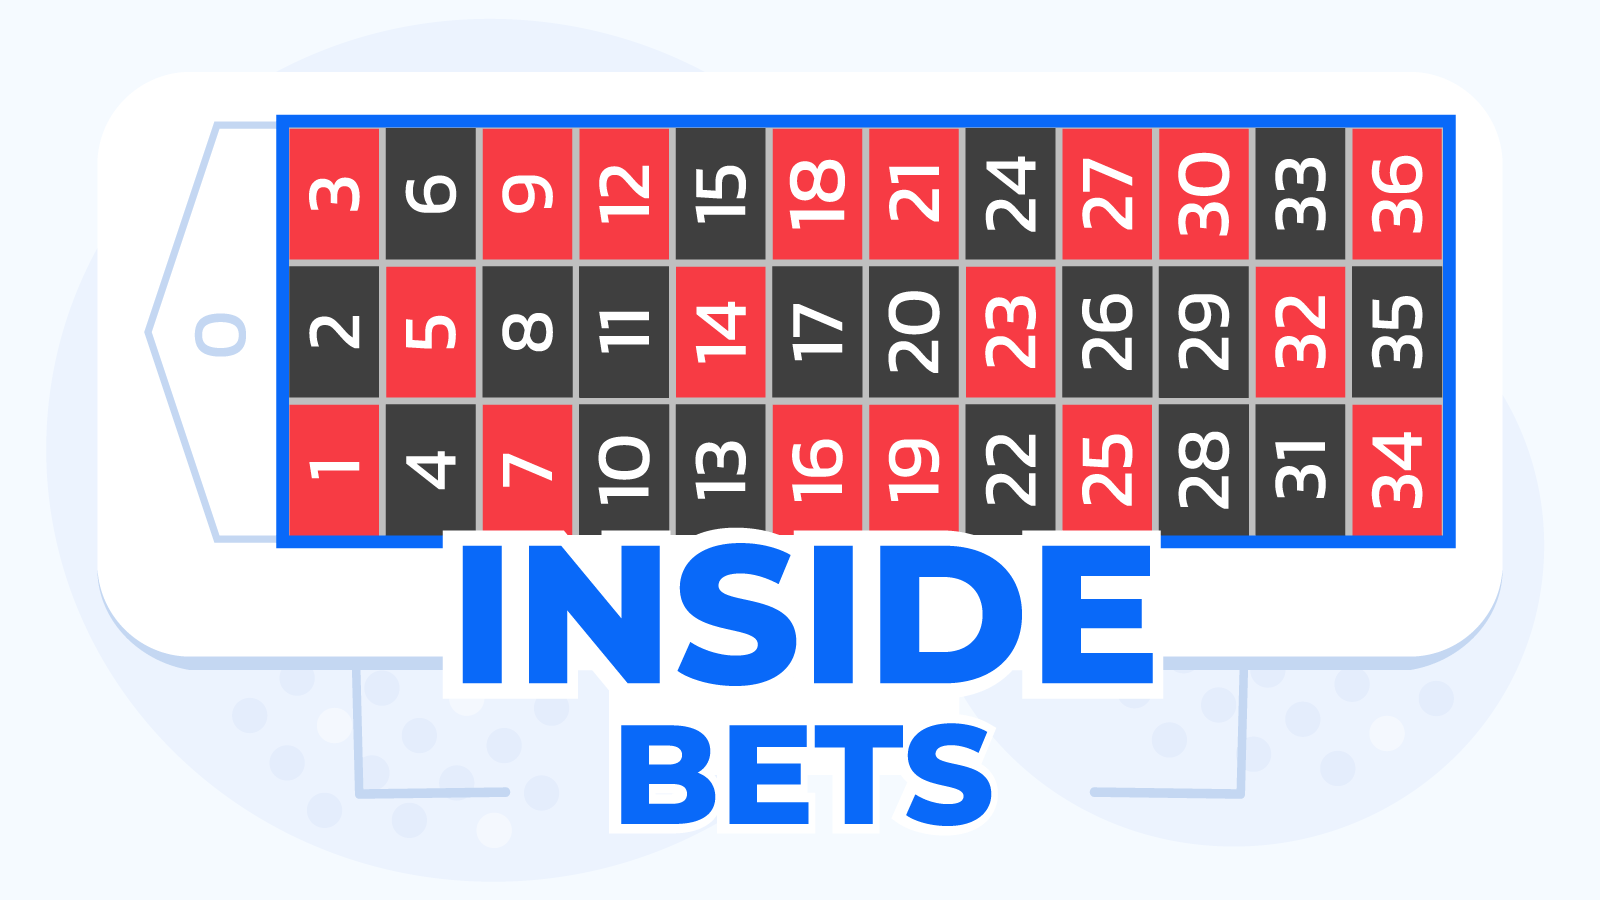 Roulette Inside Bets